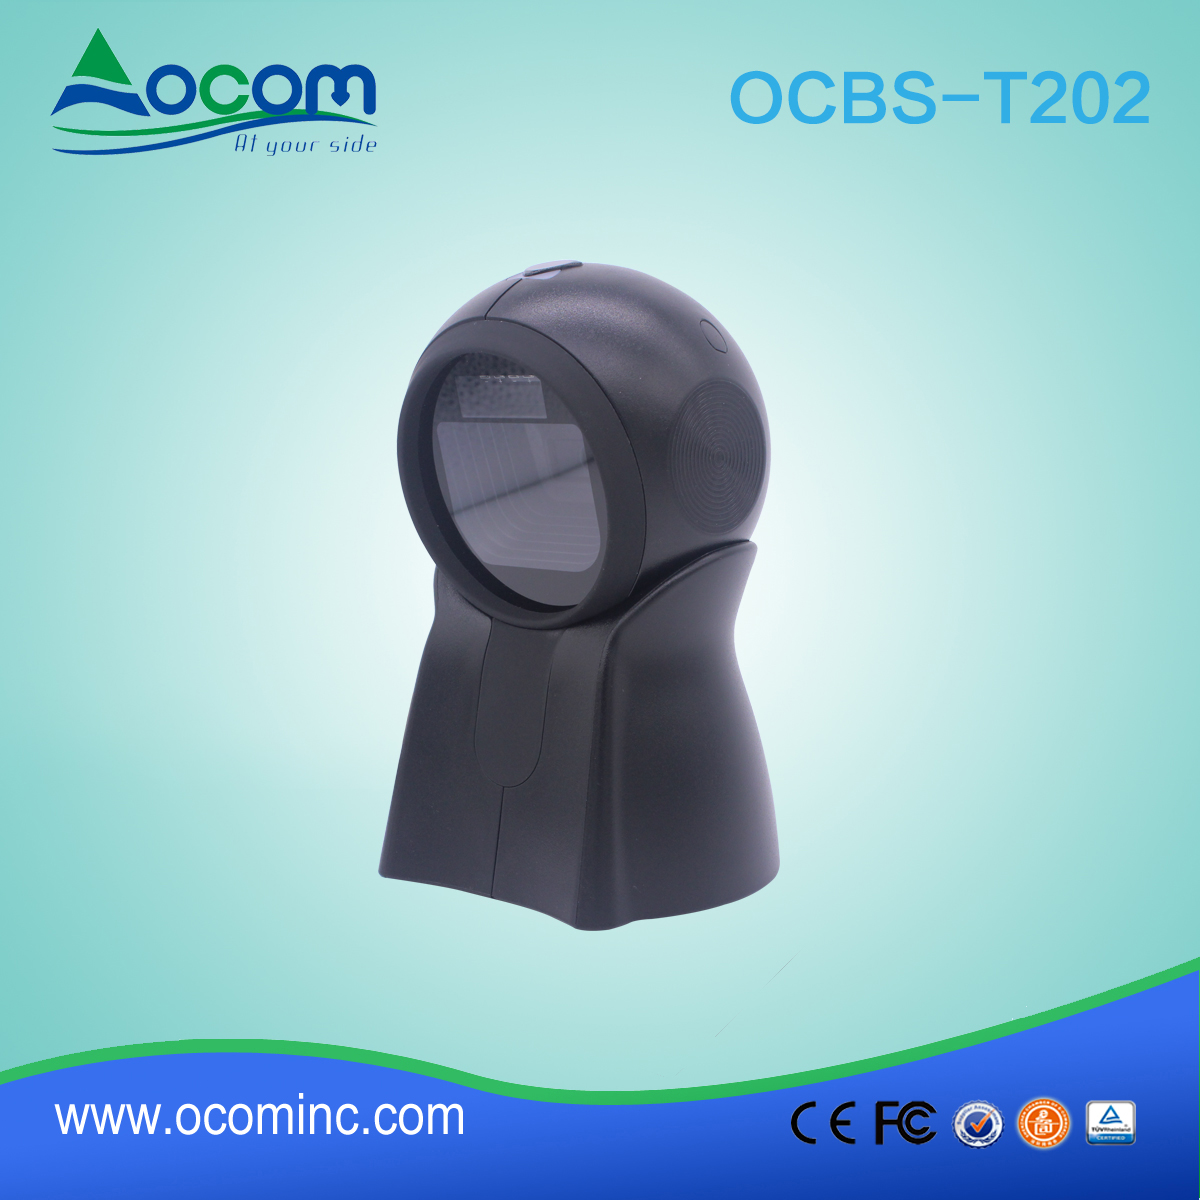 OCBS-T202: Κίνα Φτηνές σούπερ μάρκετ 2d barcode σαρωτή μηχανή